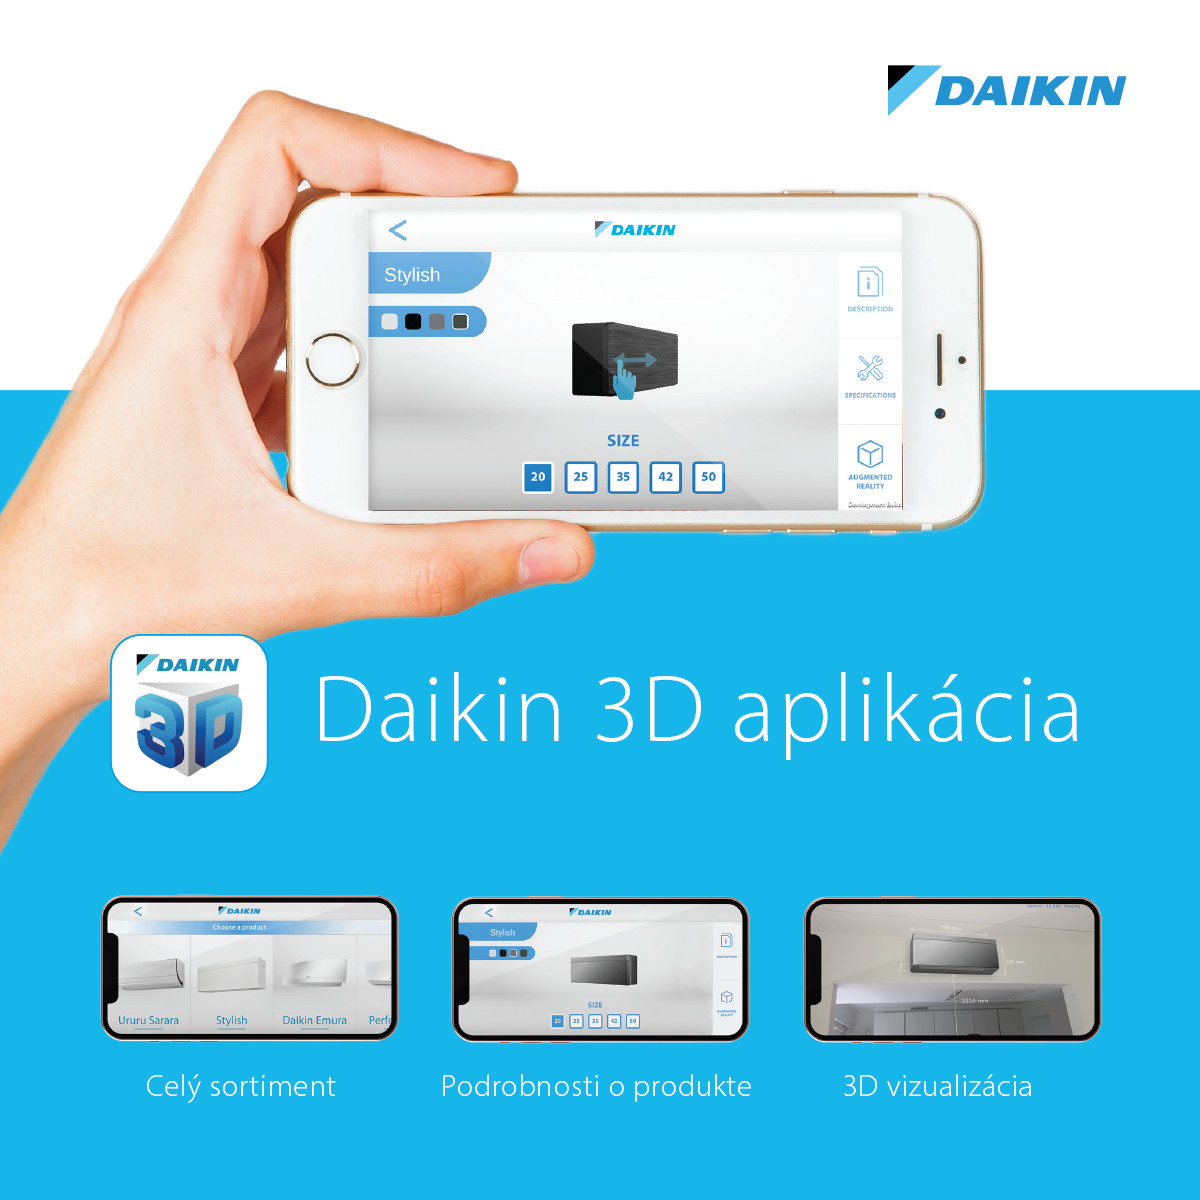 documents/images/daikin-3dapp.jpg